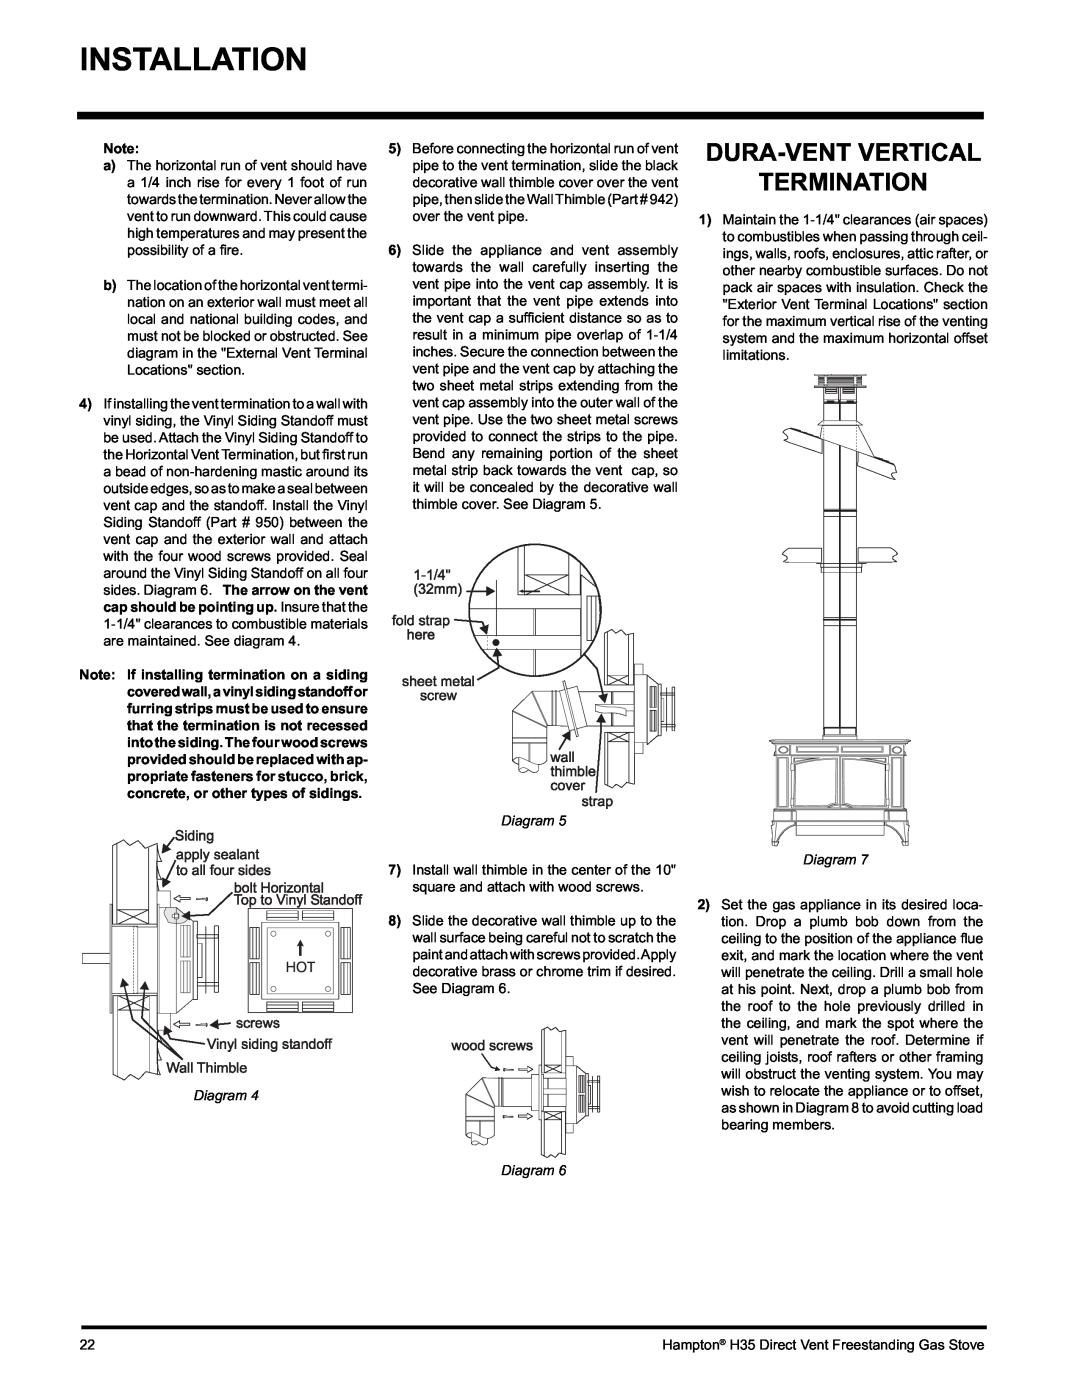 Hampton Direct H35-NG1, H35-LP1 installation manual Installation, Dura-Ventvertical Termination, Diagram 